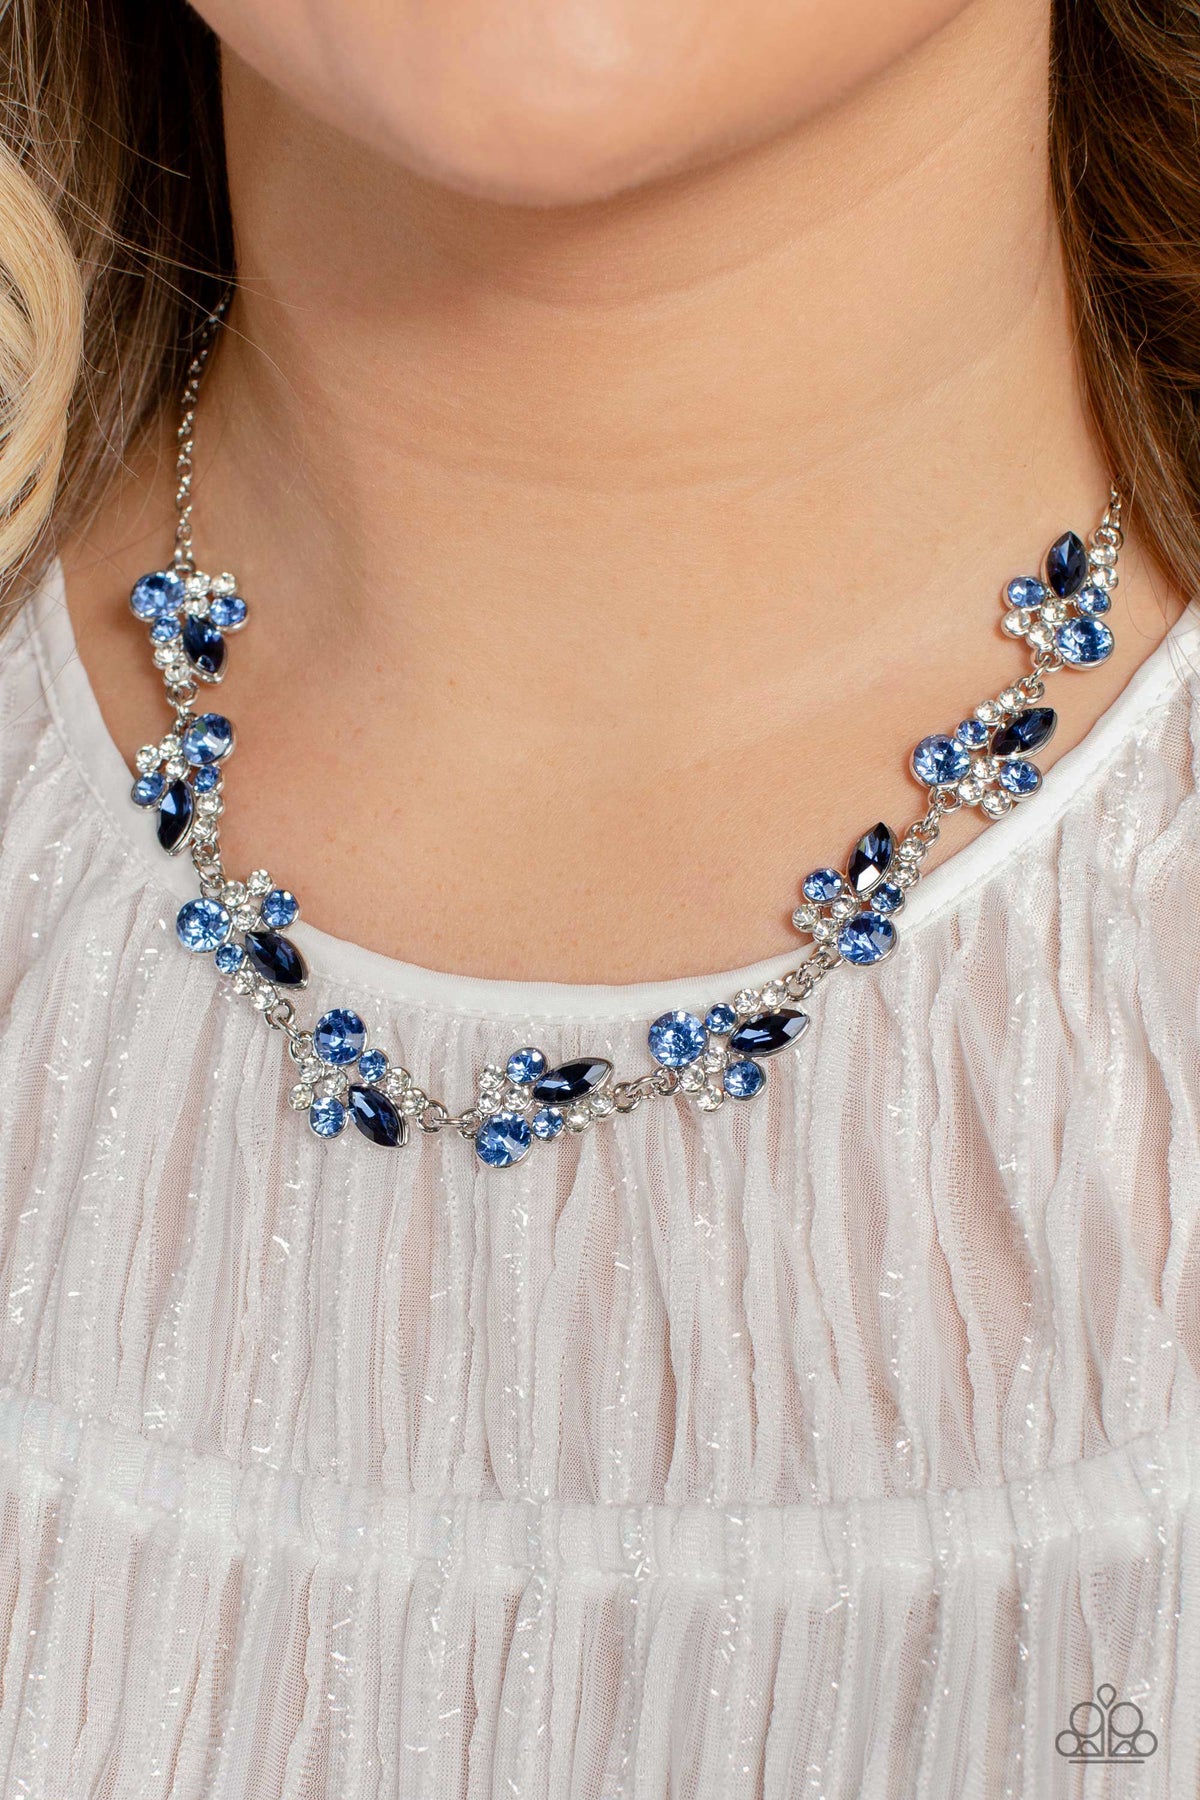 Swimming in Sparkles Blue Rhinestone Necklace - Paparazzi Accessories